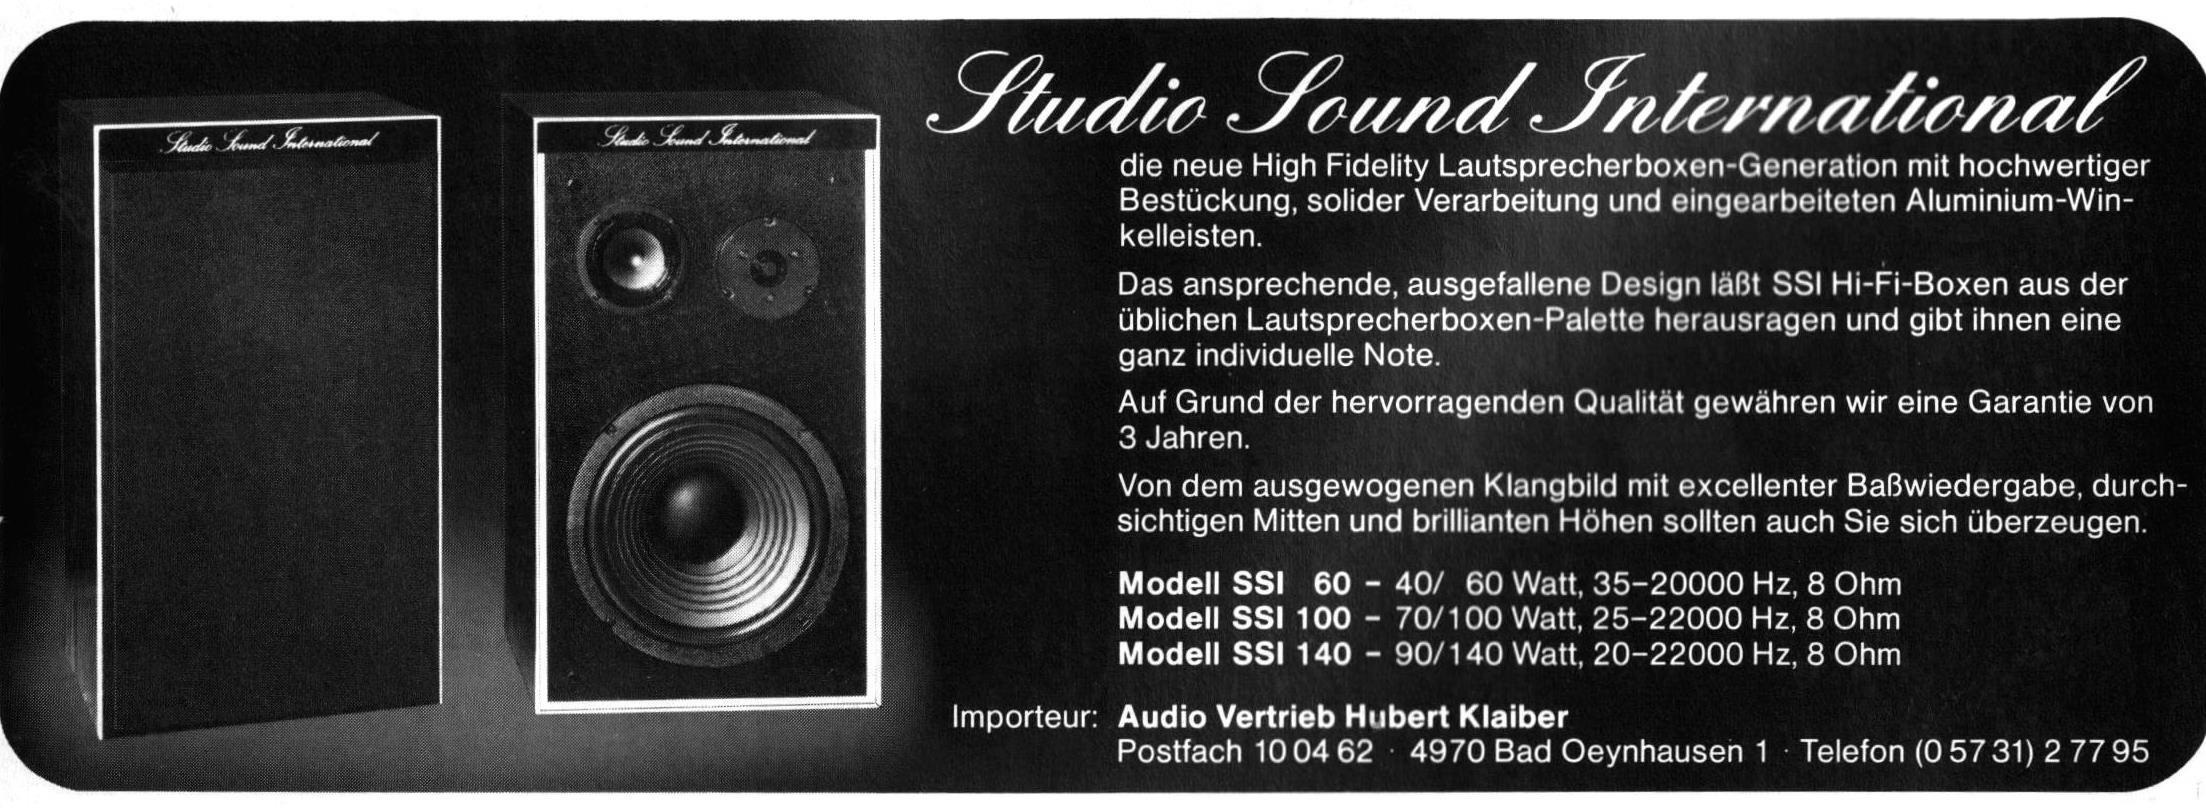 Sound Studio International 1980 309.jpg